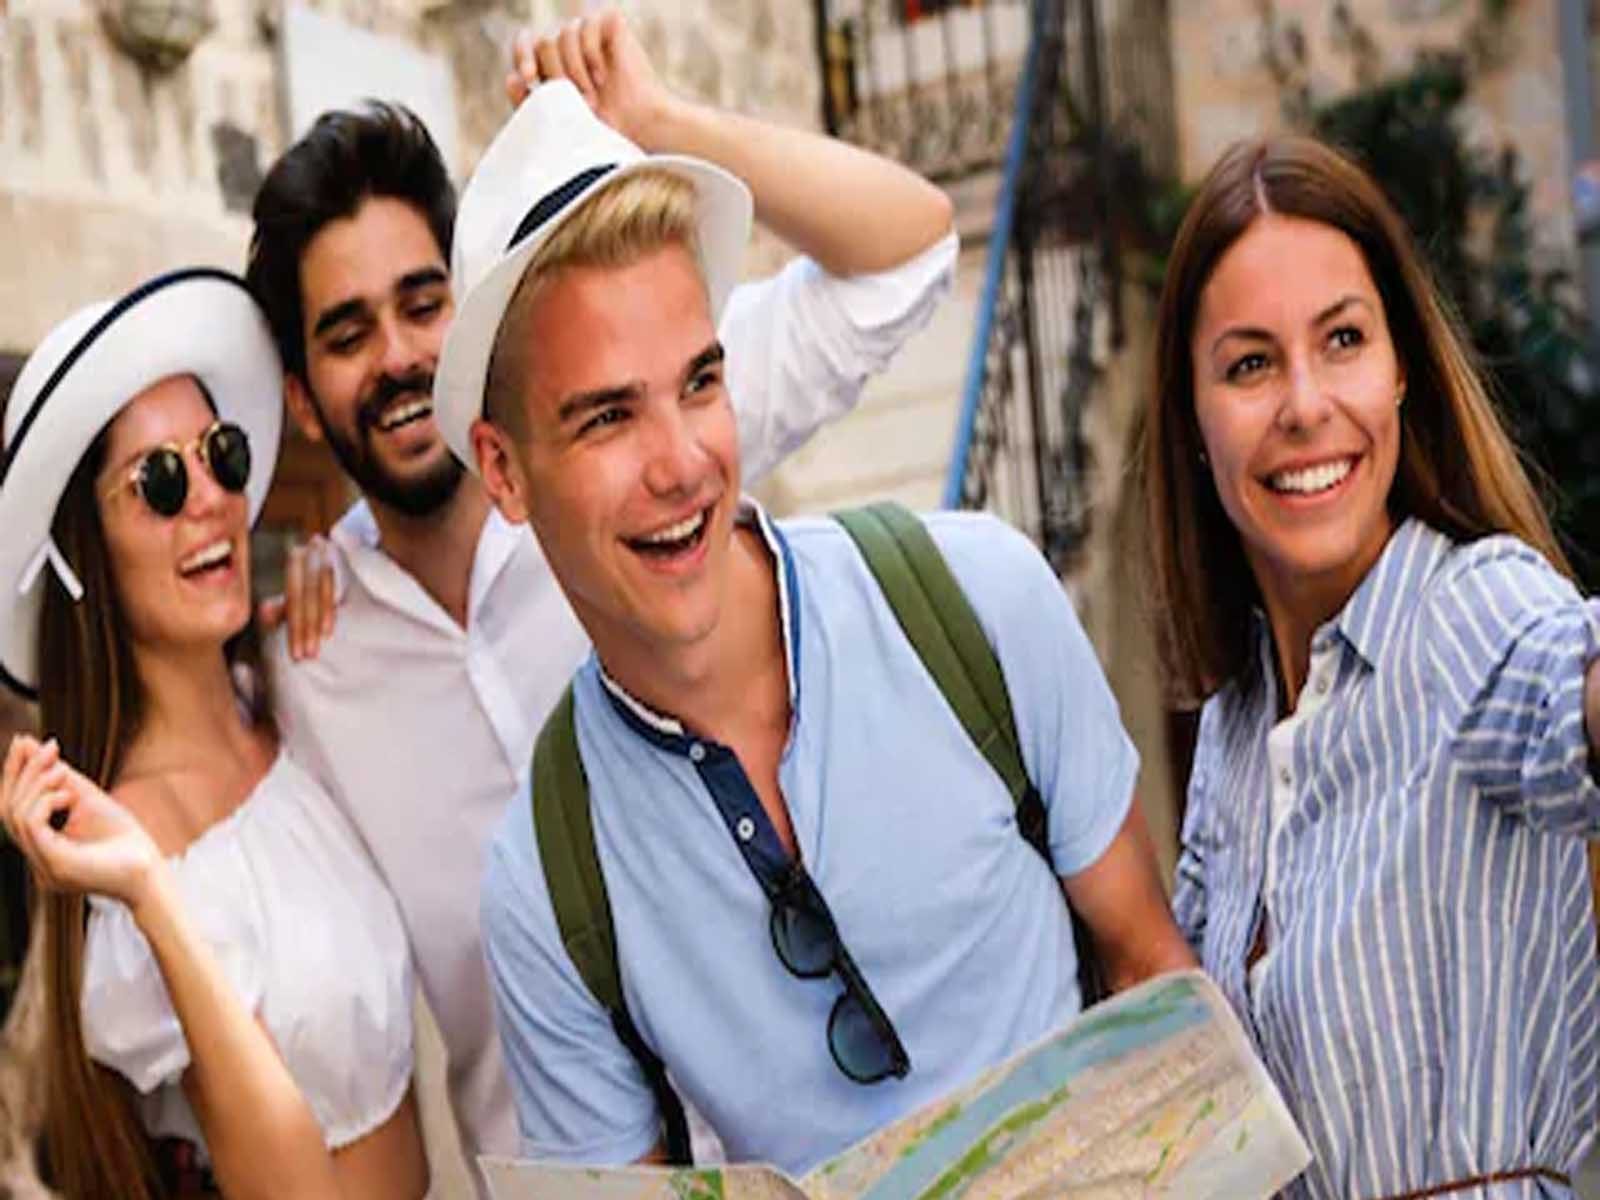 Travel News:  Students ਦੇ ਘੁੰਮਣ ਲਈ ਇਹ ਹਨ ਸਭ ਤੋਂ ਵਧੀਆ Destinations, ਘੱਟ ਬਜਟ 'ਚ ਲਵੋ ਆਨੰਦ